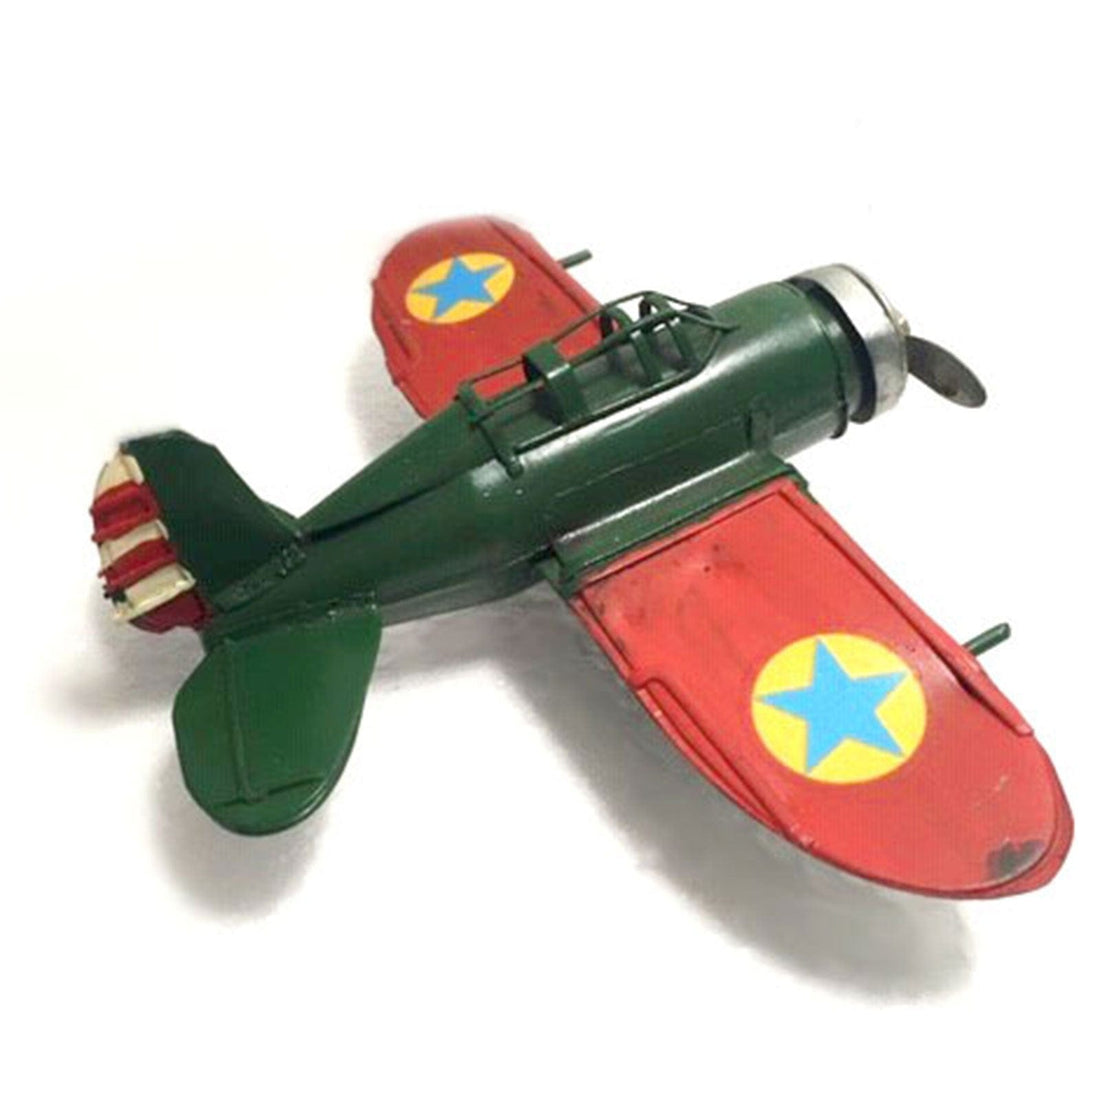 Green Mini Roamer Plane - Small Vintage Style Metal Plane.